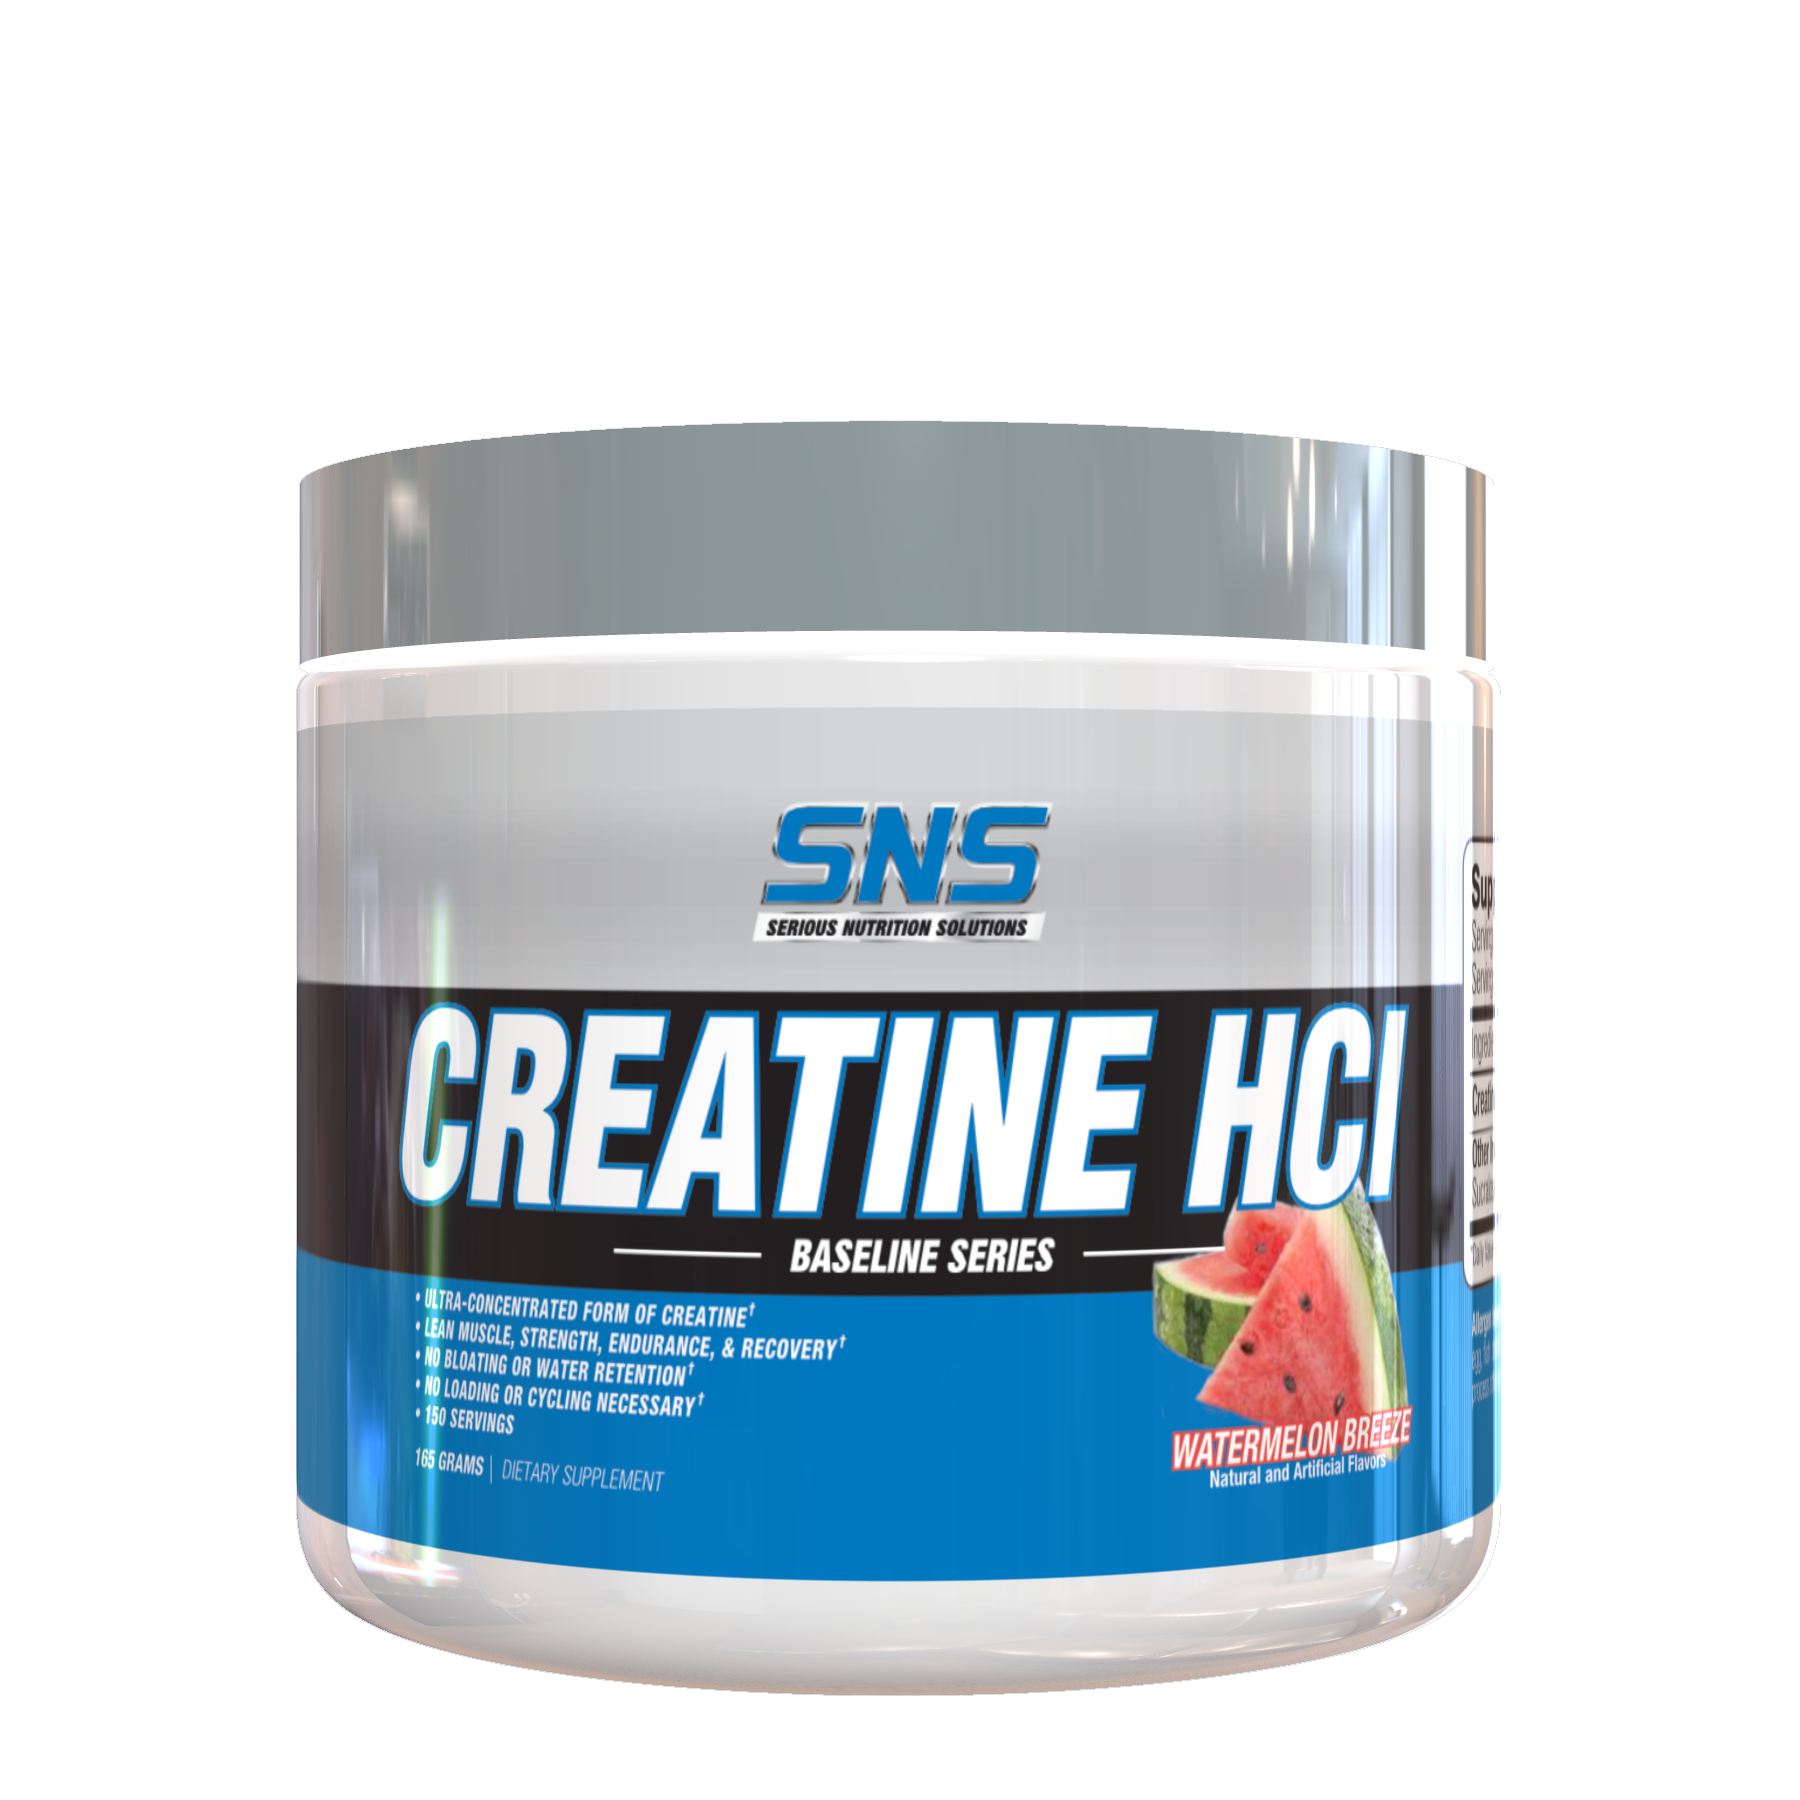 SNS Creatine HCI Watermelon Breeze A1 Supplements Store